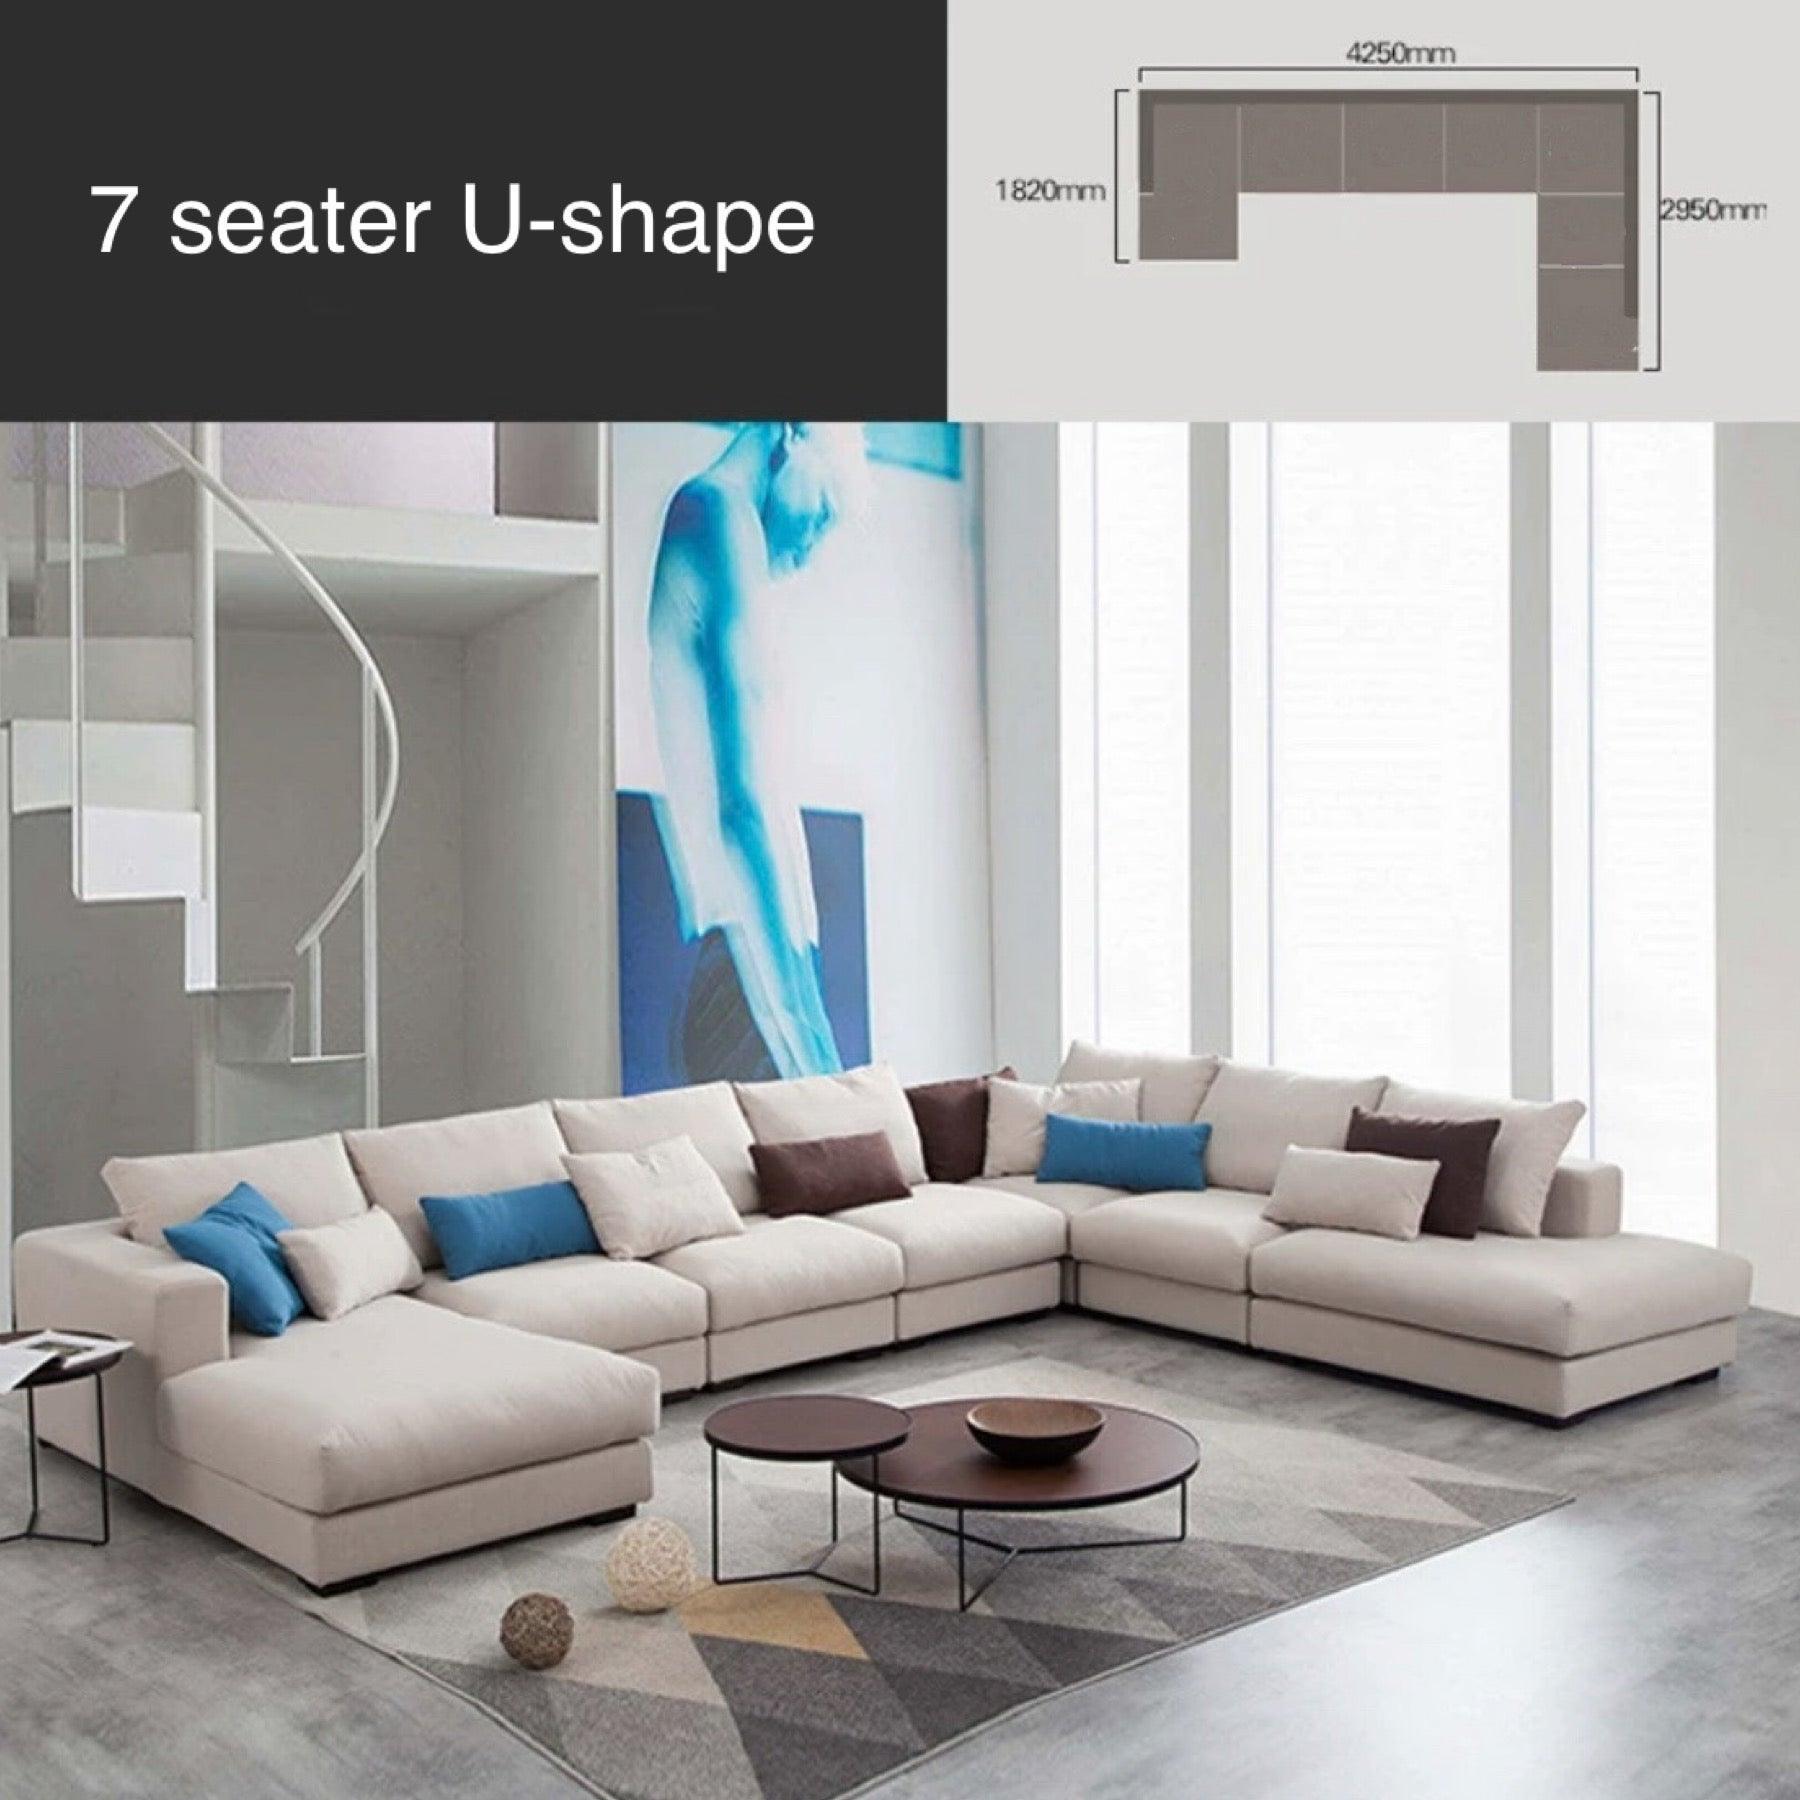 home-atelier-f31a Cotton Linen Fabric / 7 seater U-shape/ L425 x W295cm / Cream Bellini Sectional L-shape Corner Seat Sofa